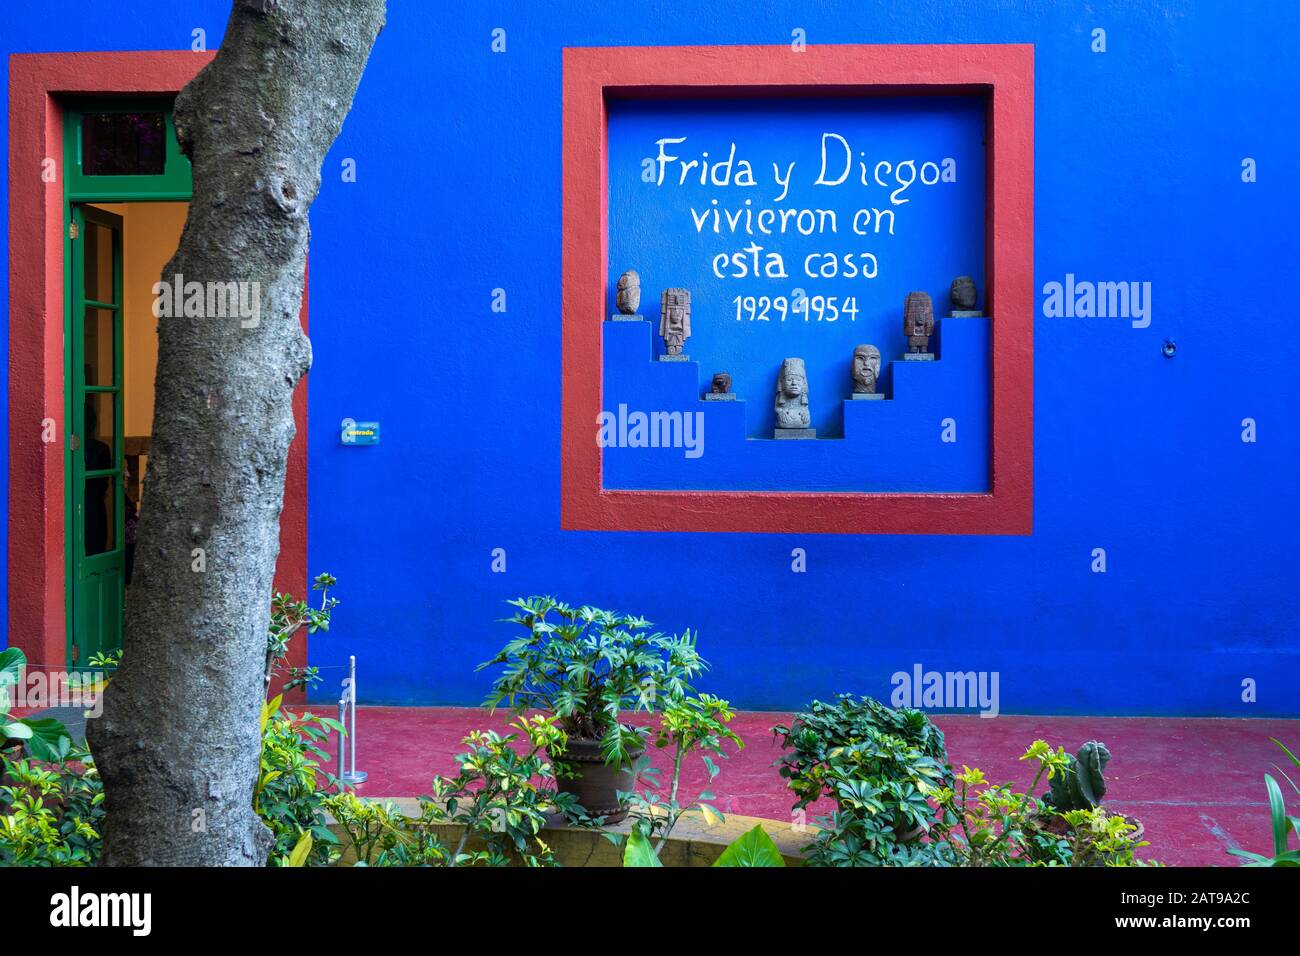 Das berühmte Frida Kahlo Museum, auch bekannt als Casa Azul (blaues Haus) in Mexiko-Stadt, Mexiko. Stockfoto